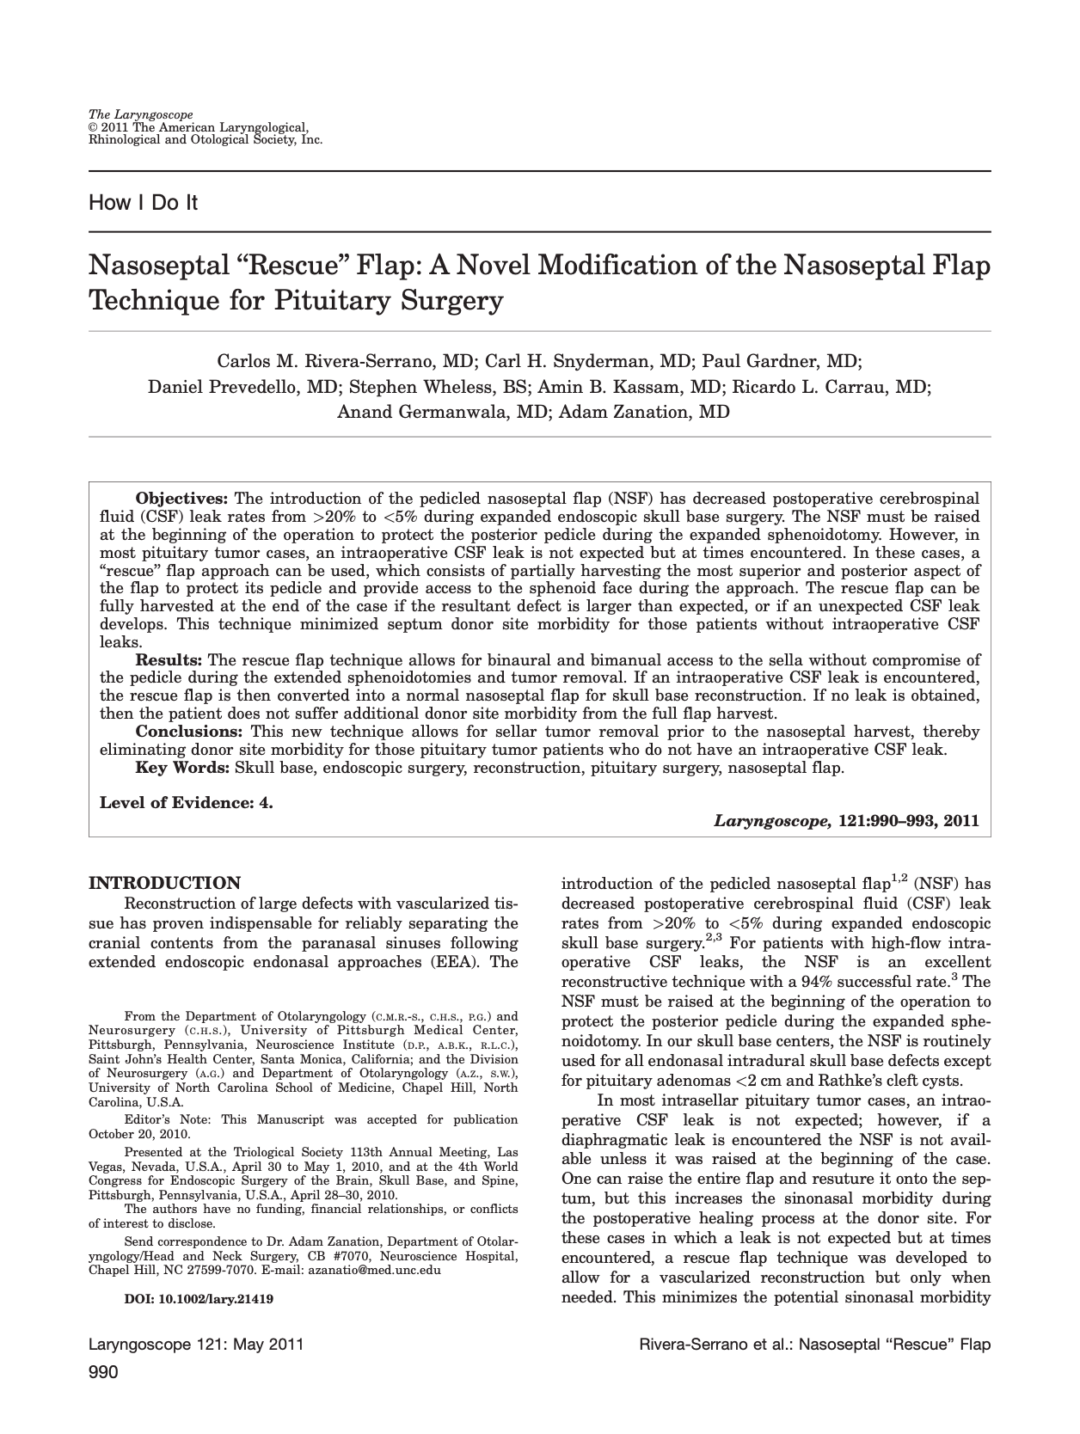 Nasoseptal ‘‘Rescue’’ Flap: A Novel Modification of the Nasoseptal Flap Technique for Pituitary Surgery